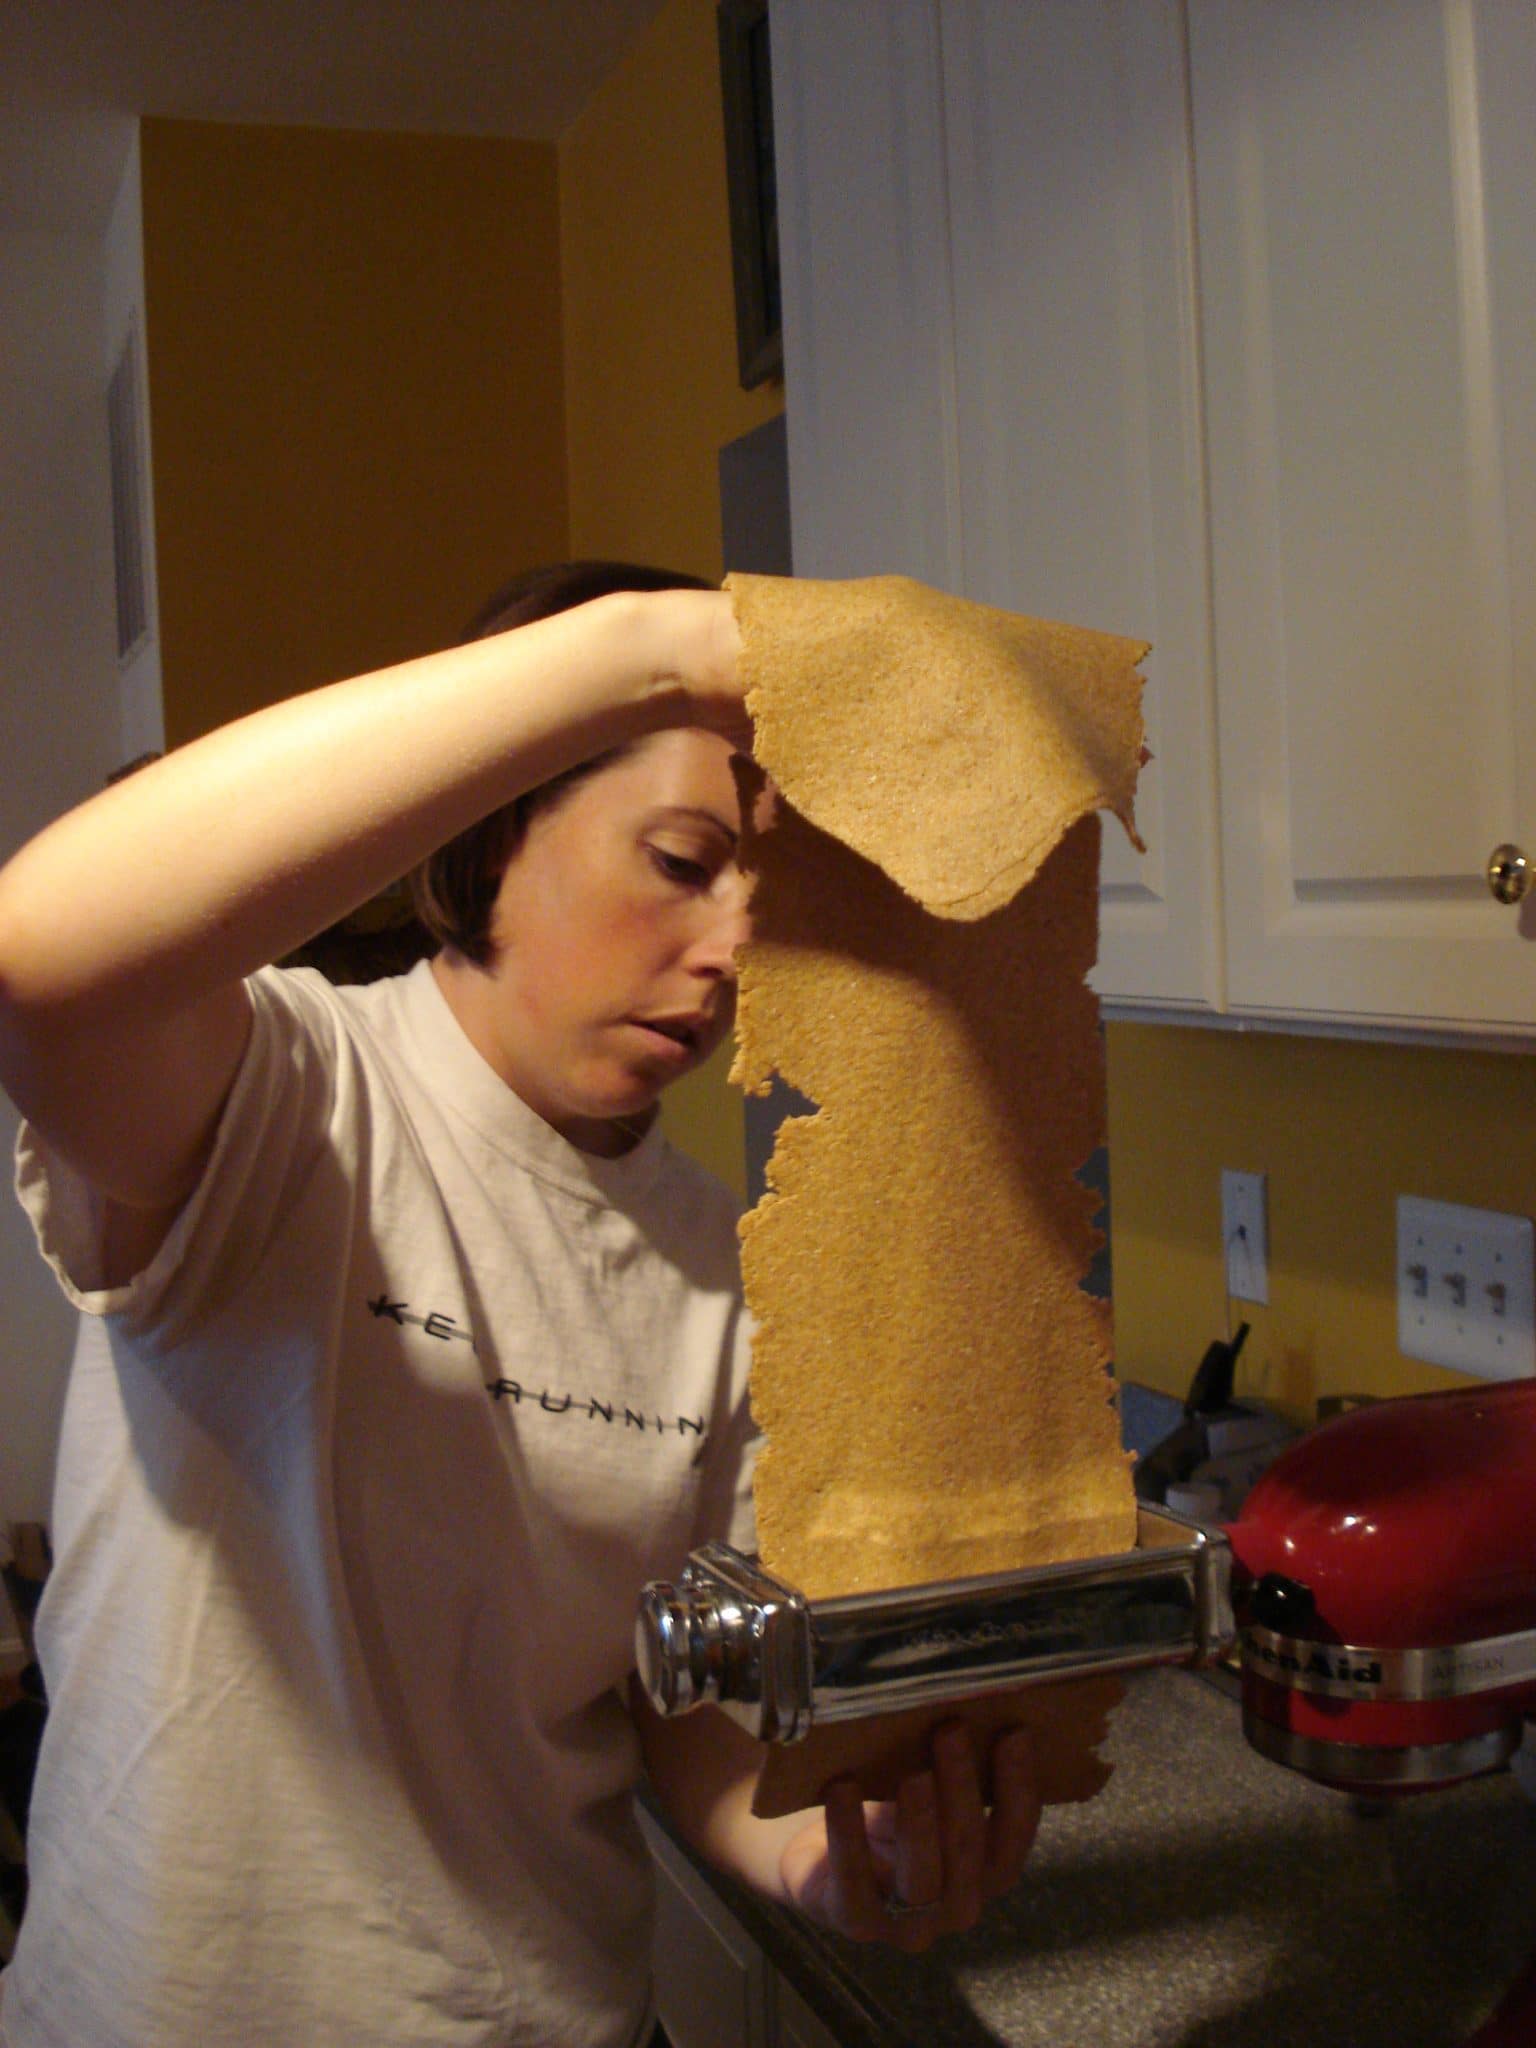 Woman running pasta dough through pasta cutter, Kitchenaid attachment